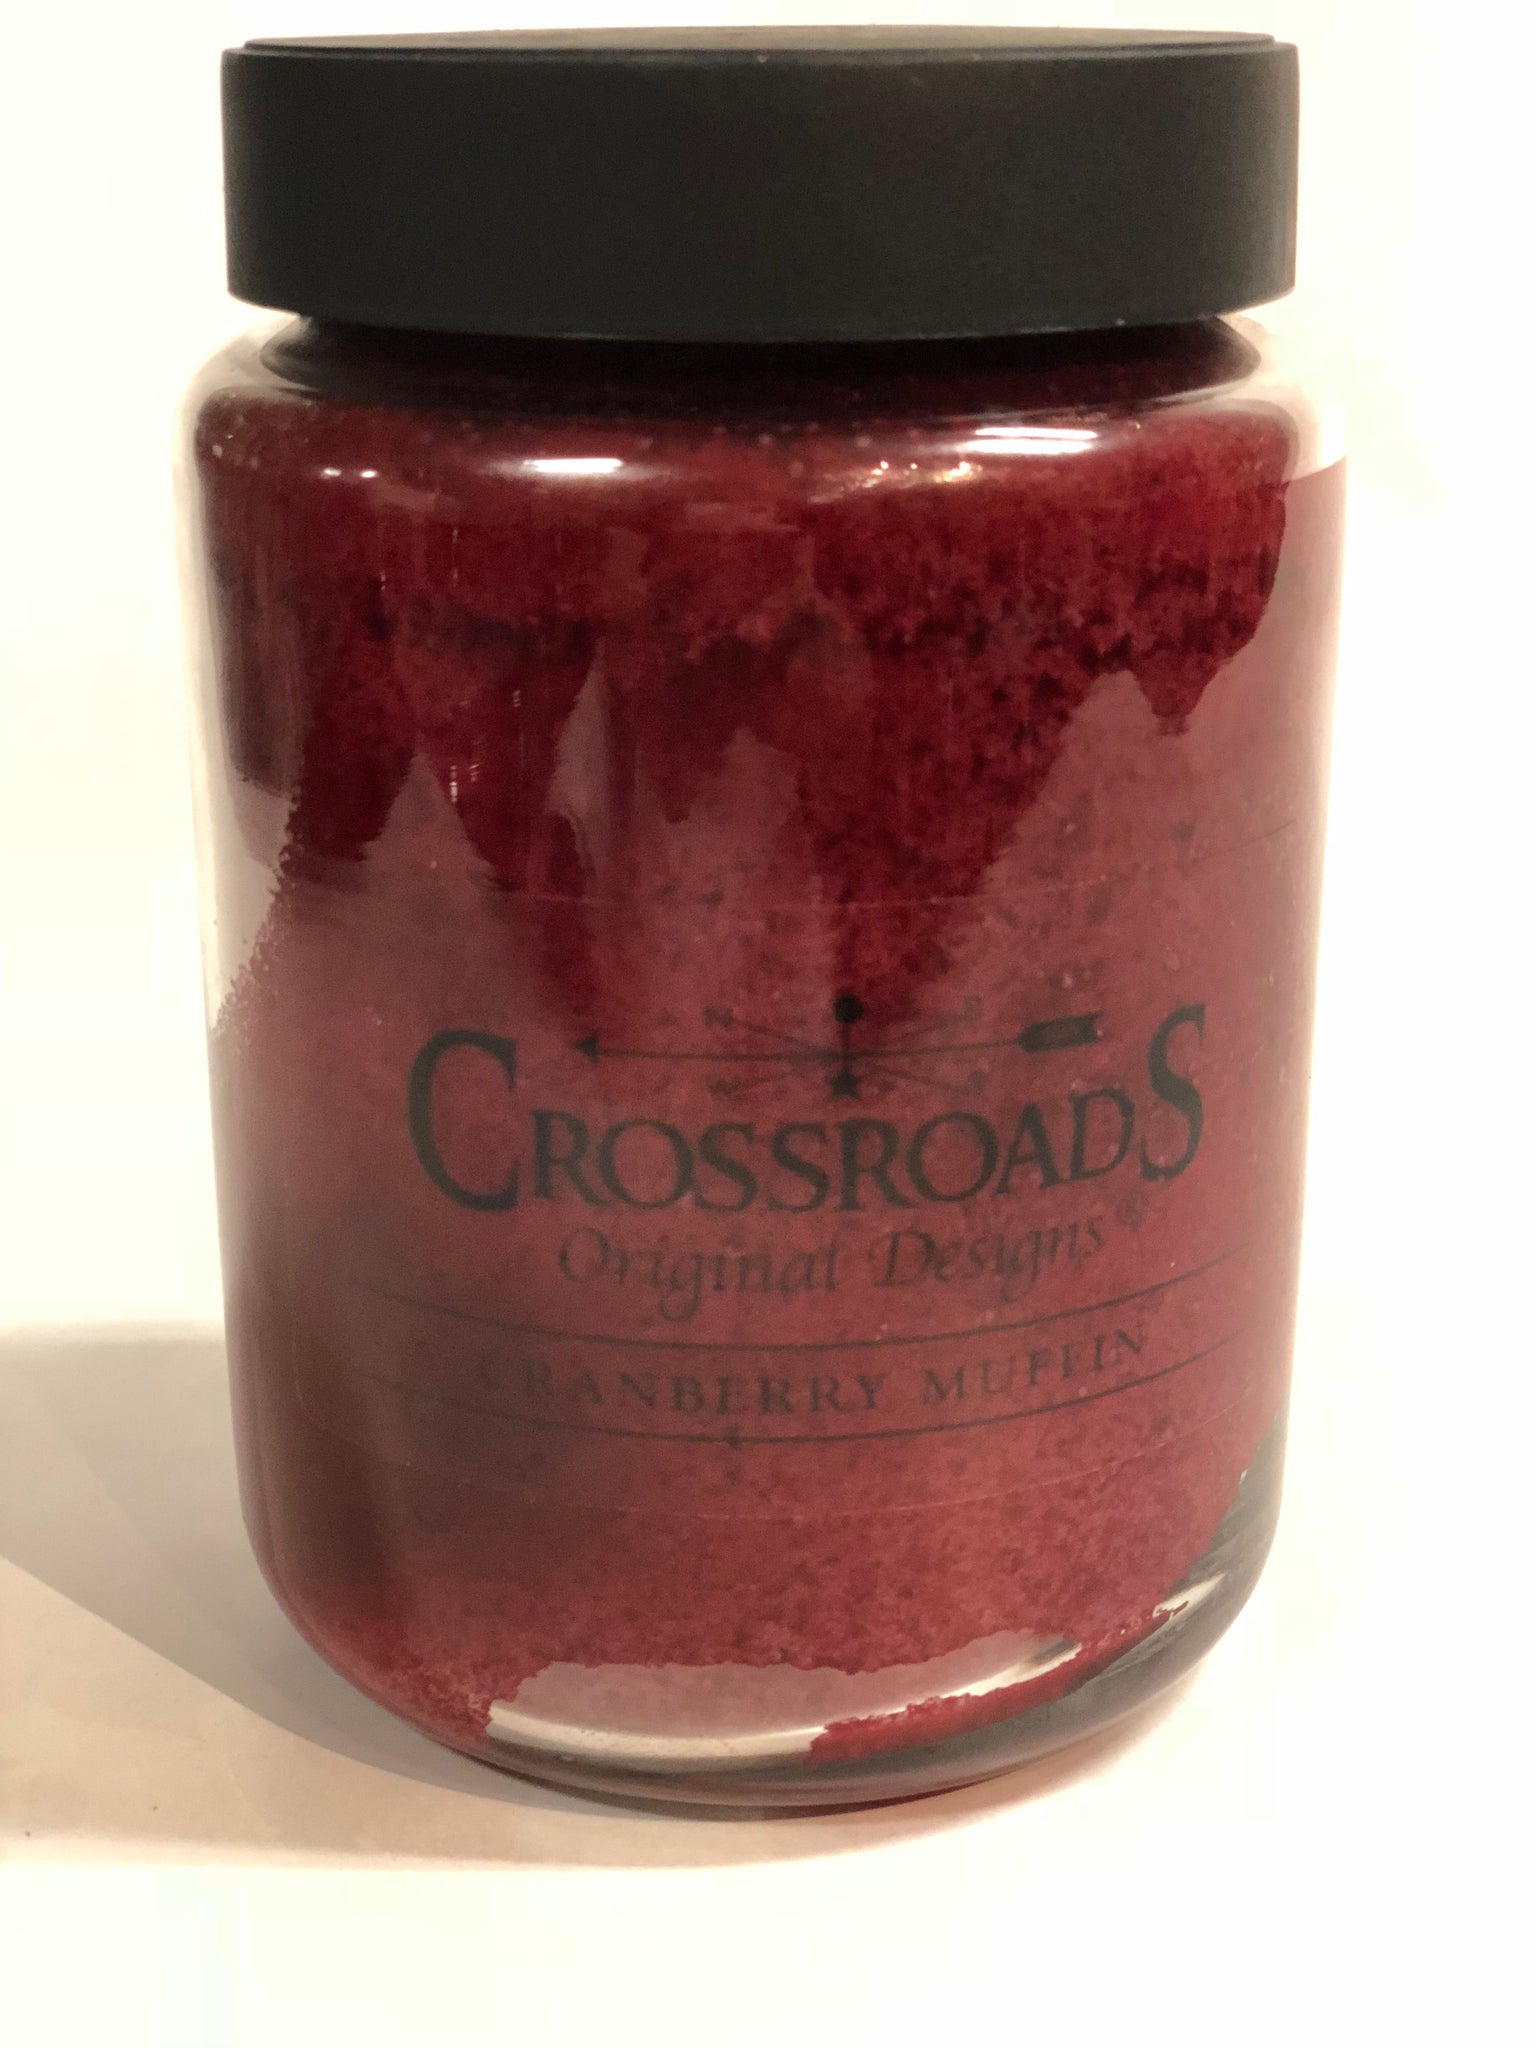 Crossroads Jar Candle - Cranberry Muffin